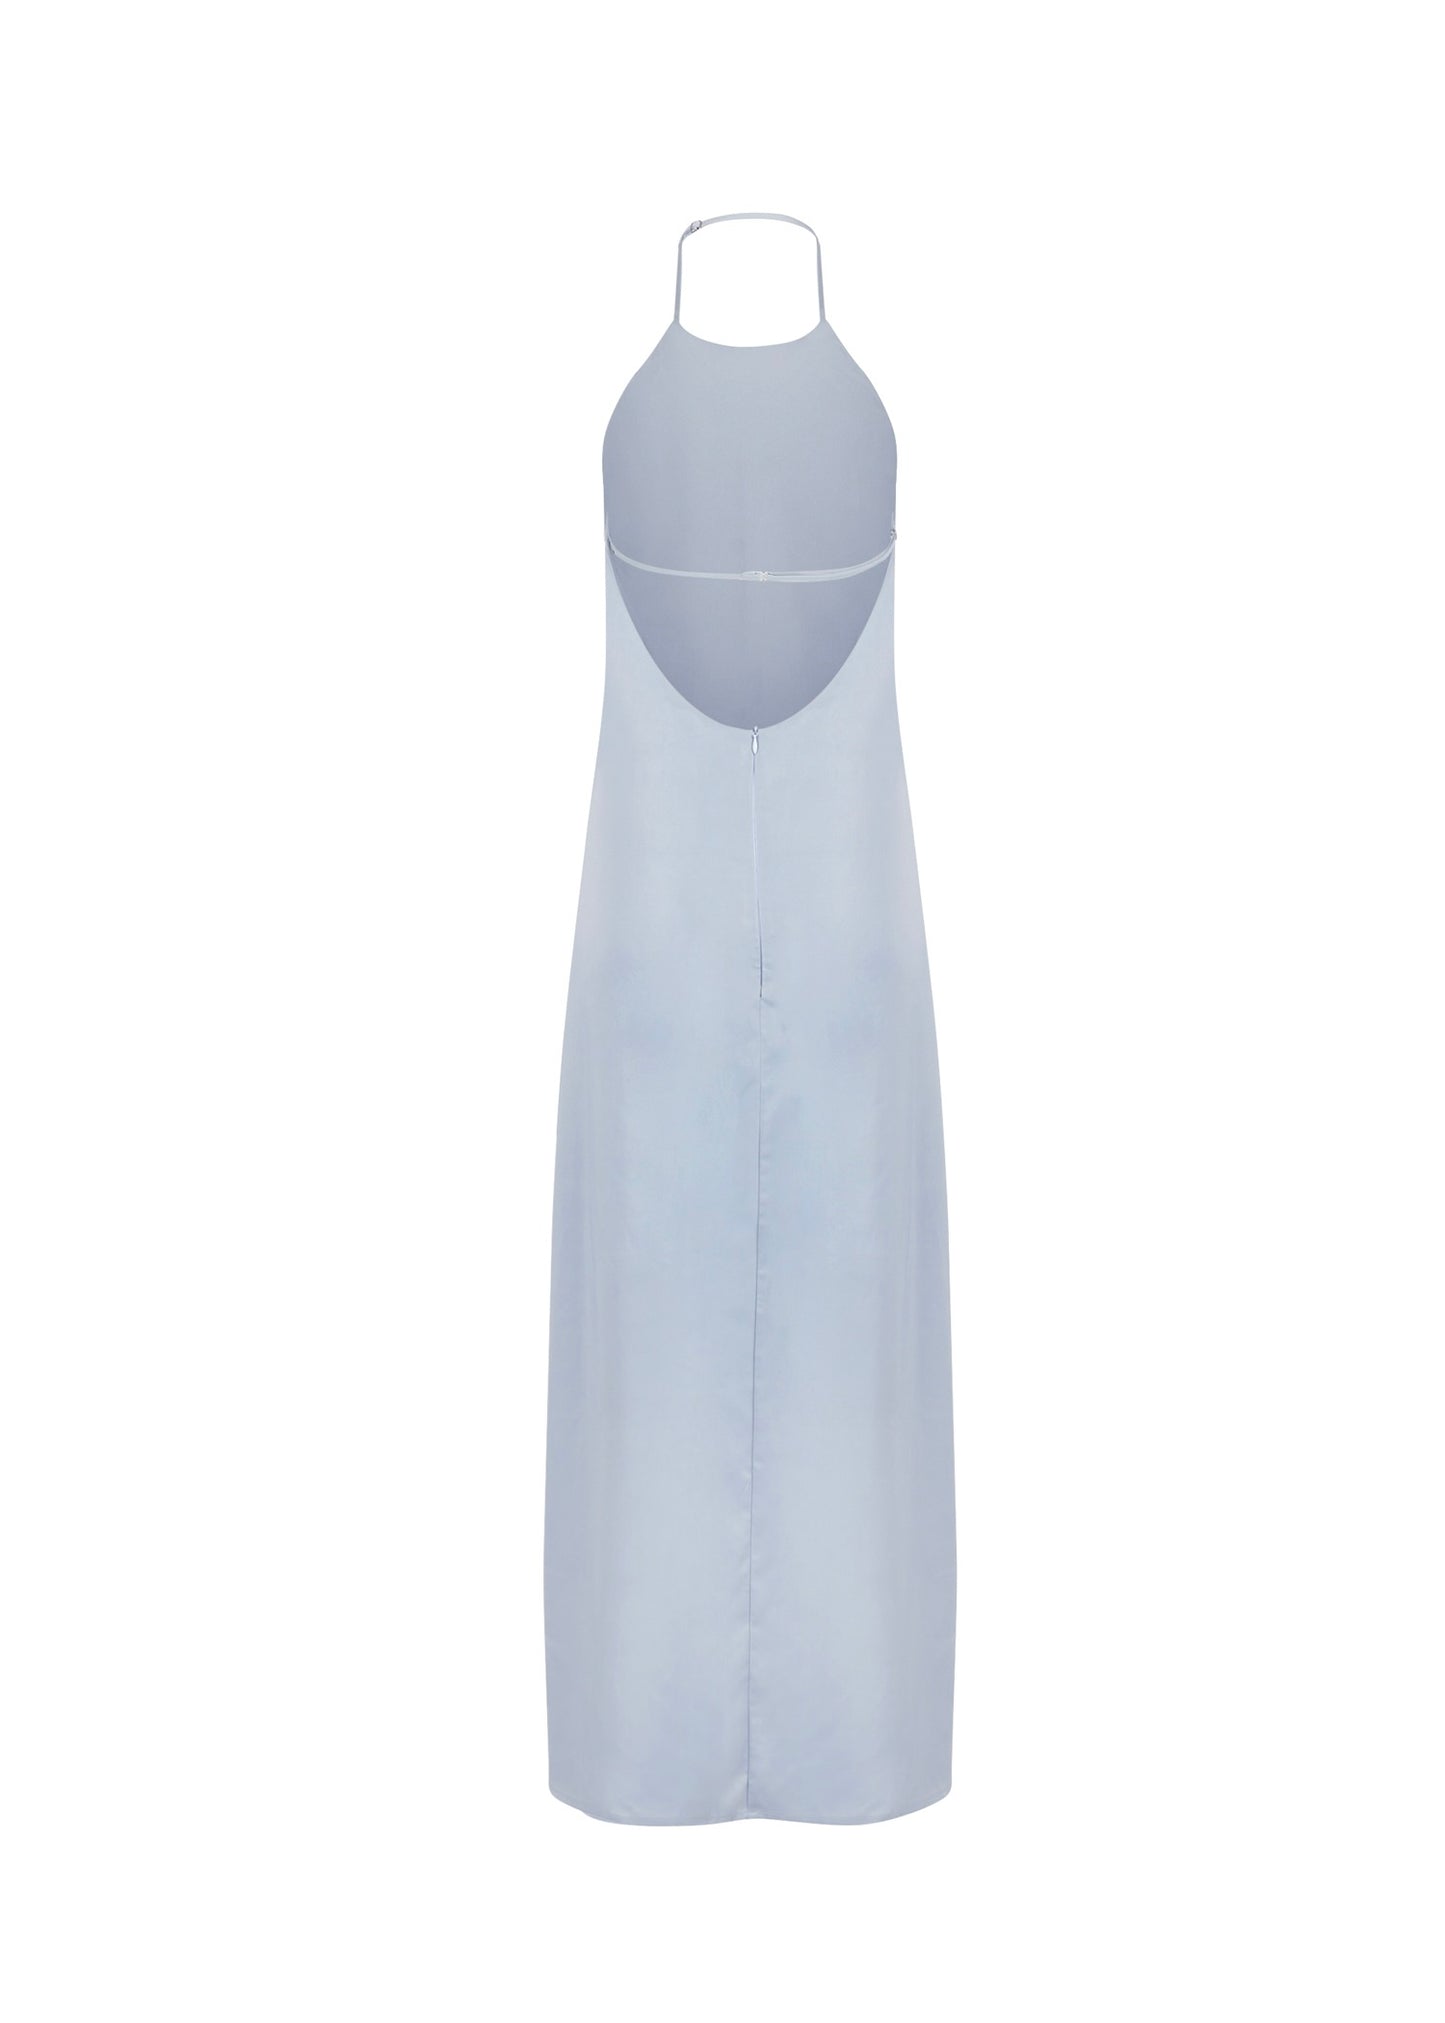 LYDIA DRESS SAMPLE 1 | FROST